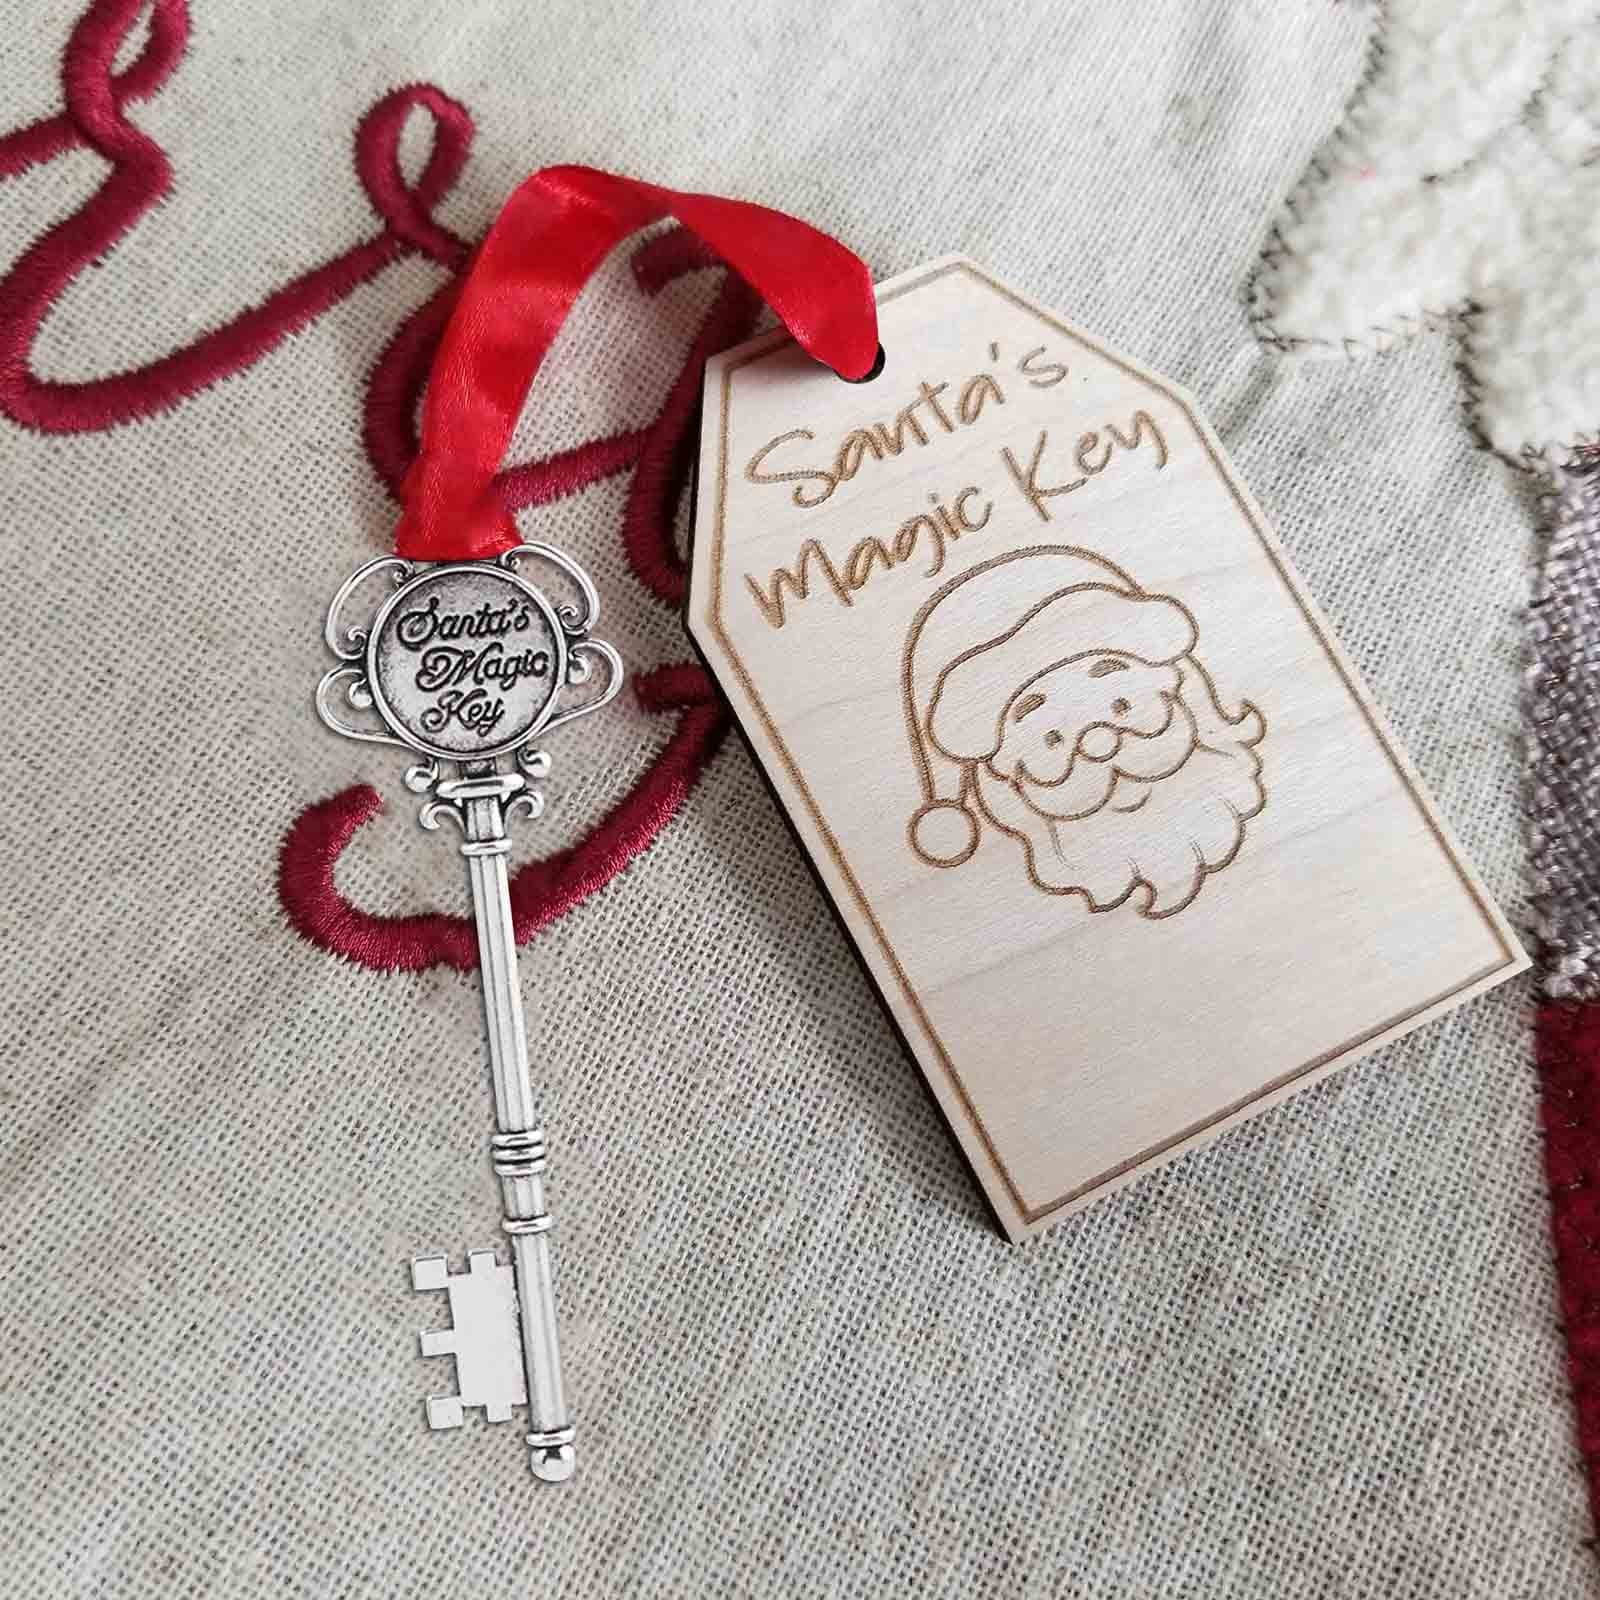 Mishuowoti Santa's Key For House With No Chimney Ornament Santa